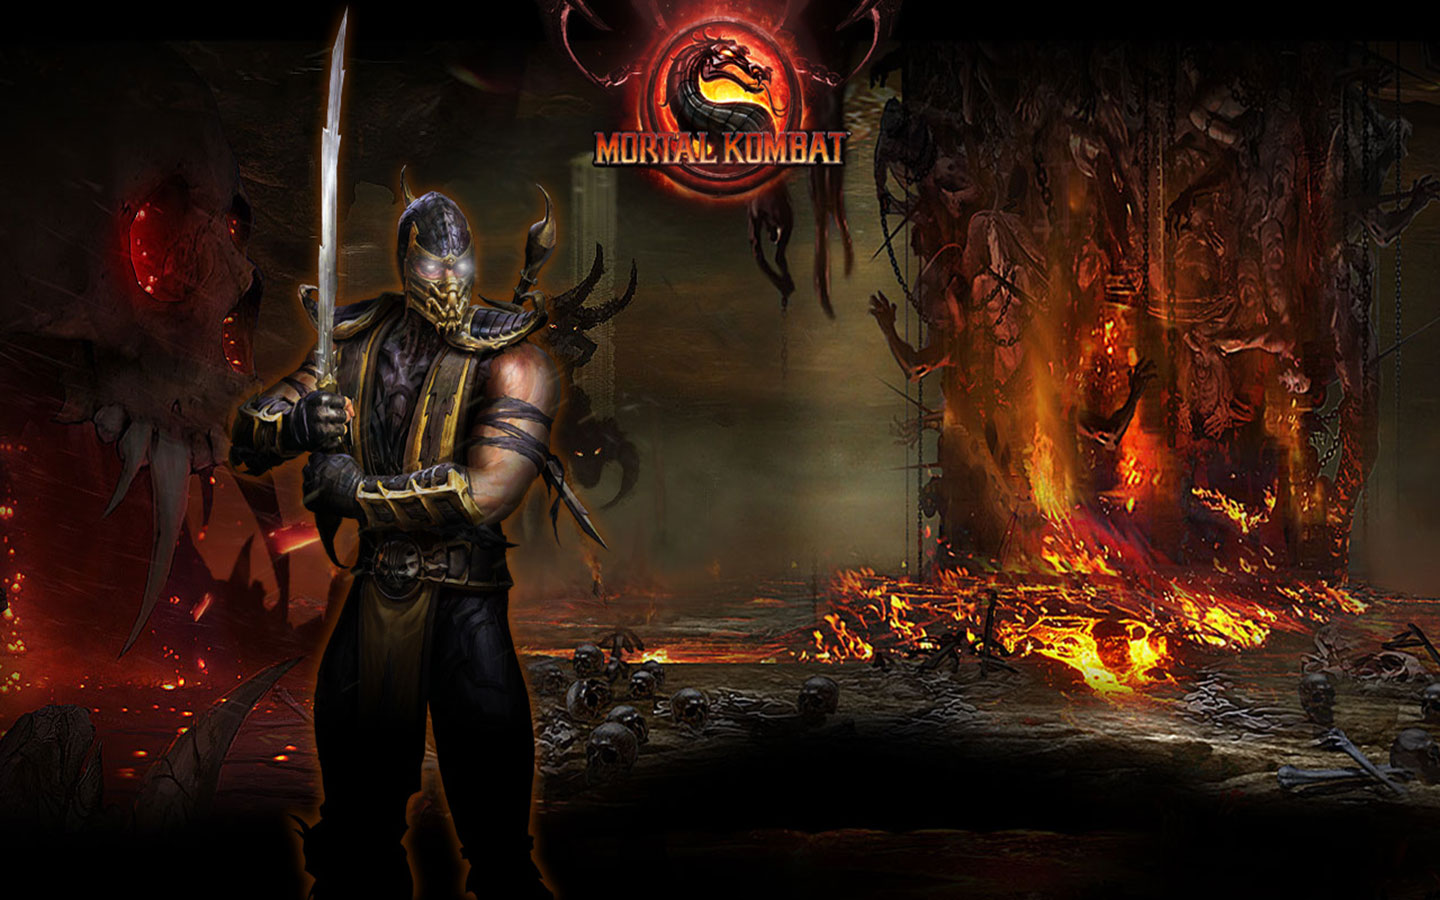 Wallpapers Juegos: Mortal Kombat II